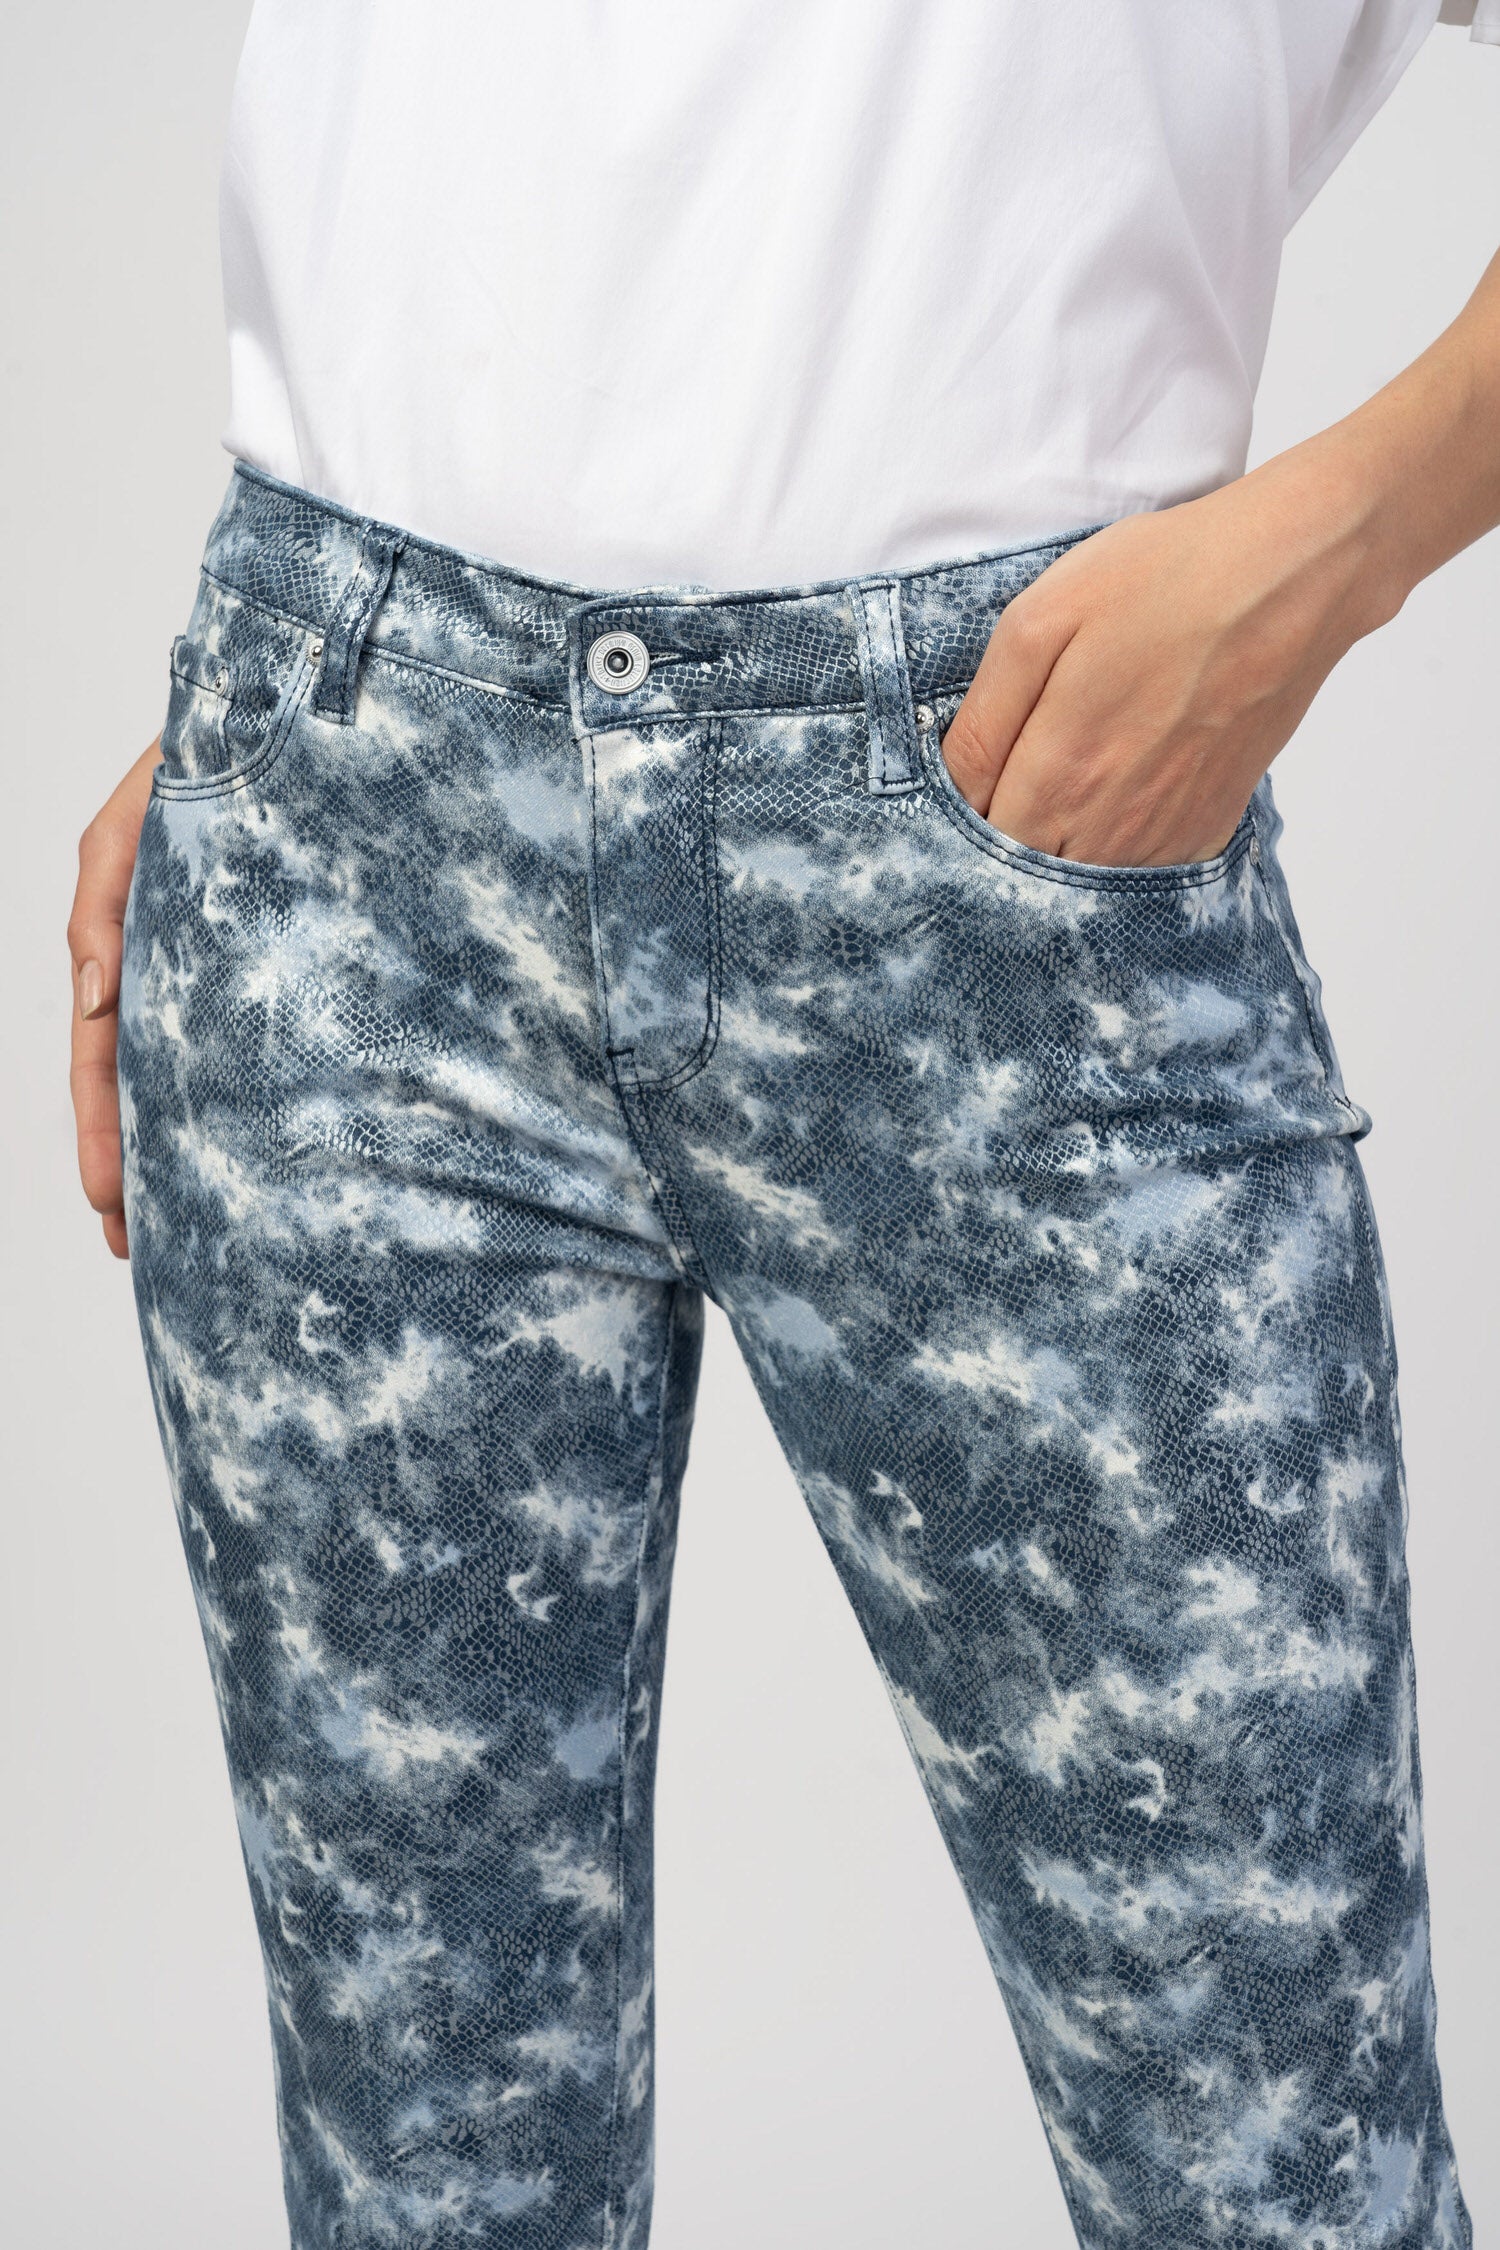 Camo printed pants - Ten